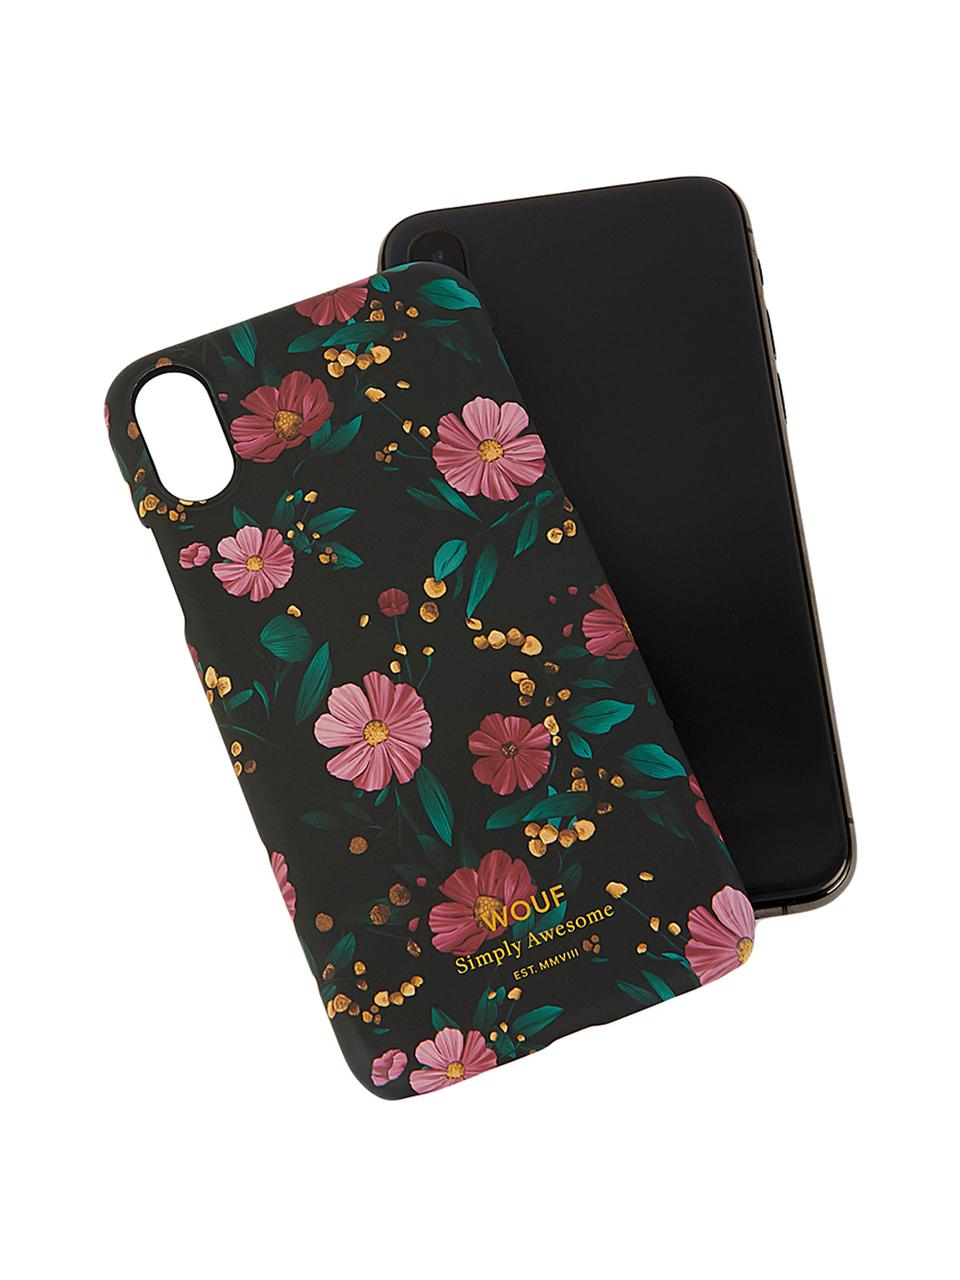 Funda para iPhone X Black Flowers, Silicona, Multicolor, An 7 x Al 15 cm